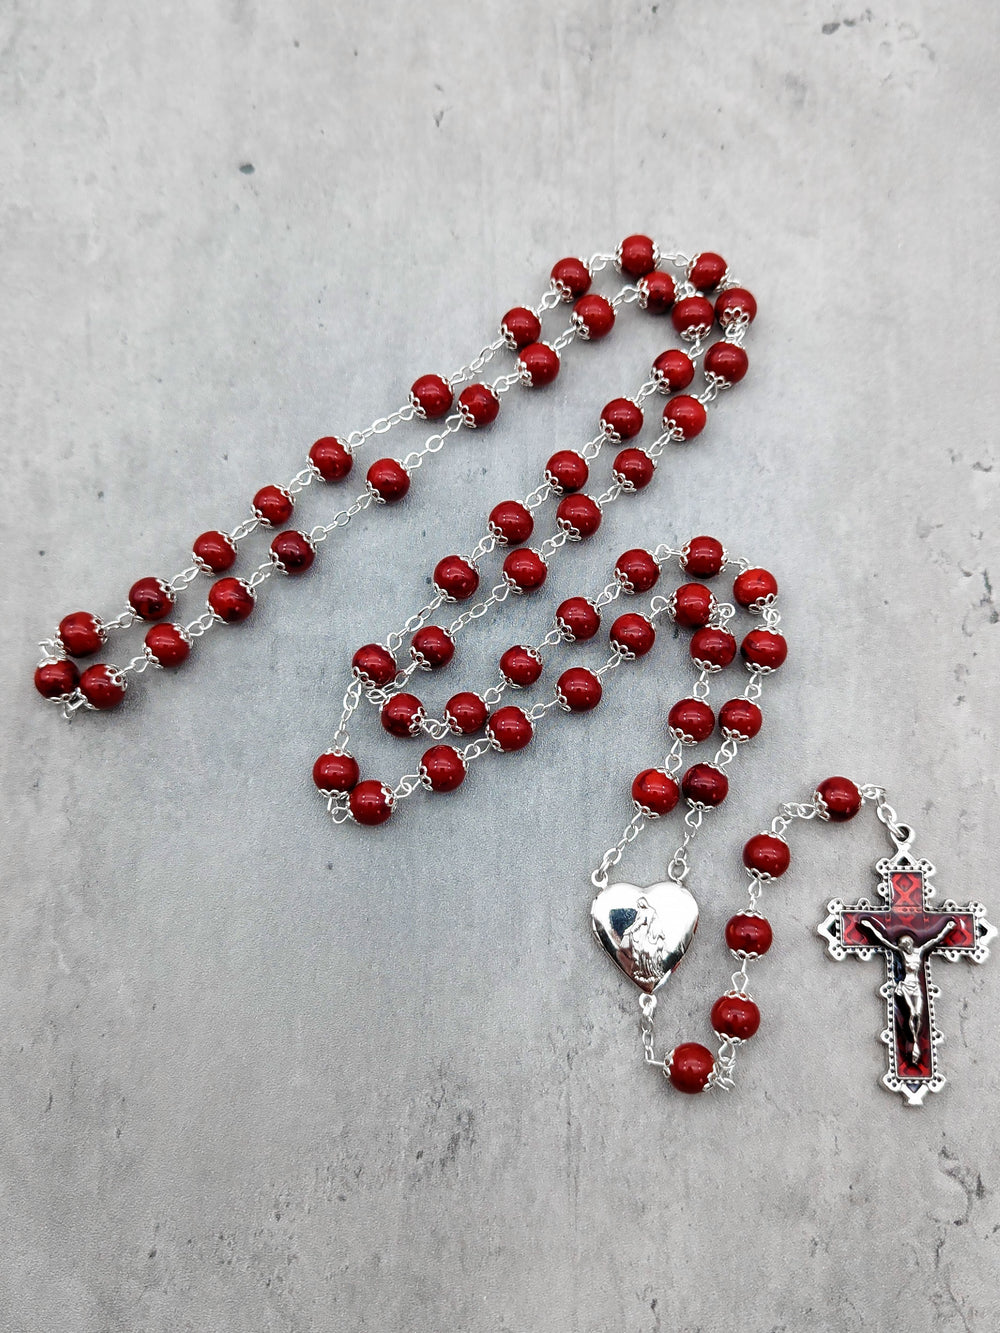 Handmade Sacred Heart Locket Our Lady of Fatima Rosary Glass Beads